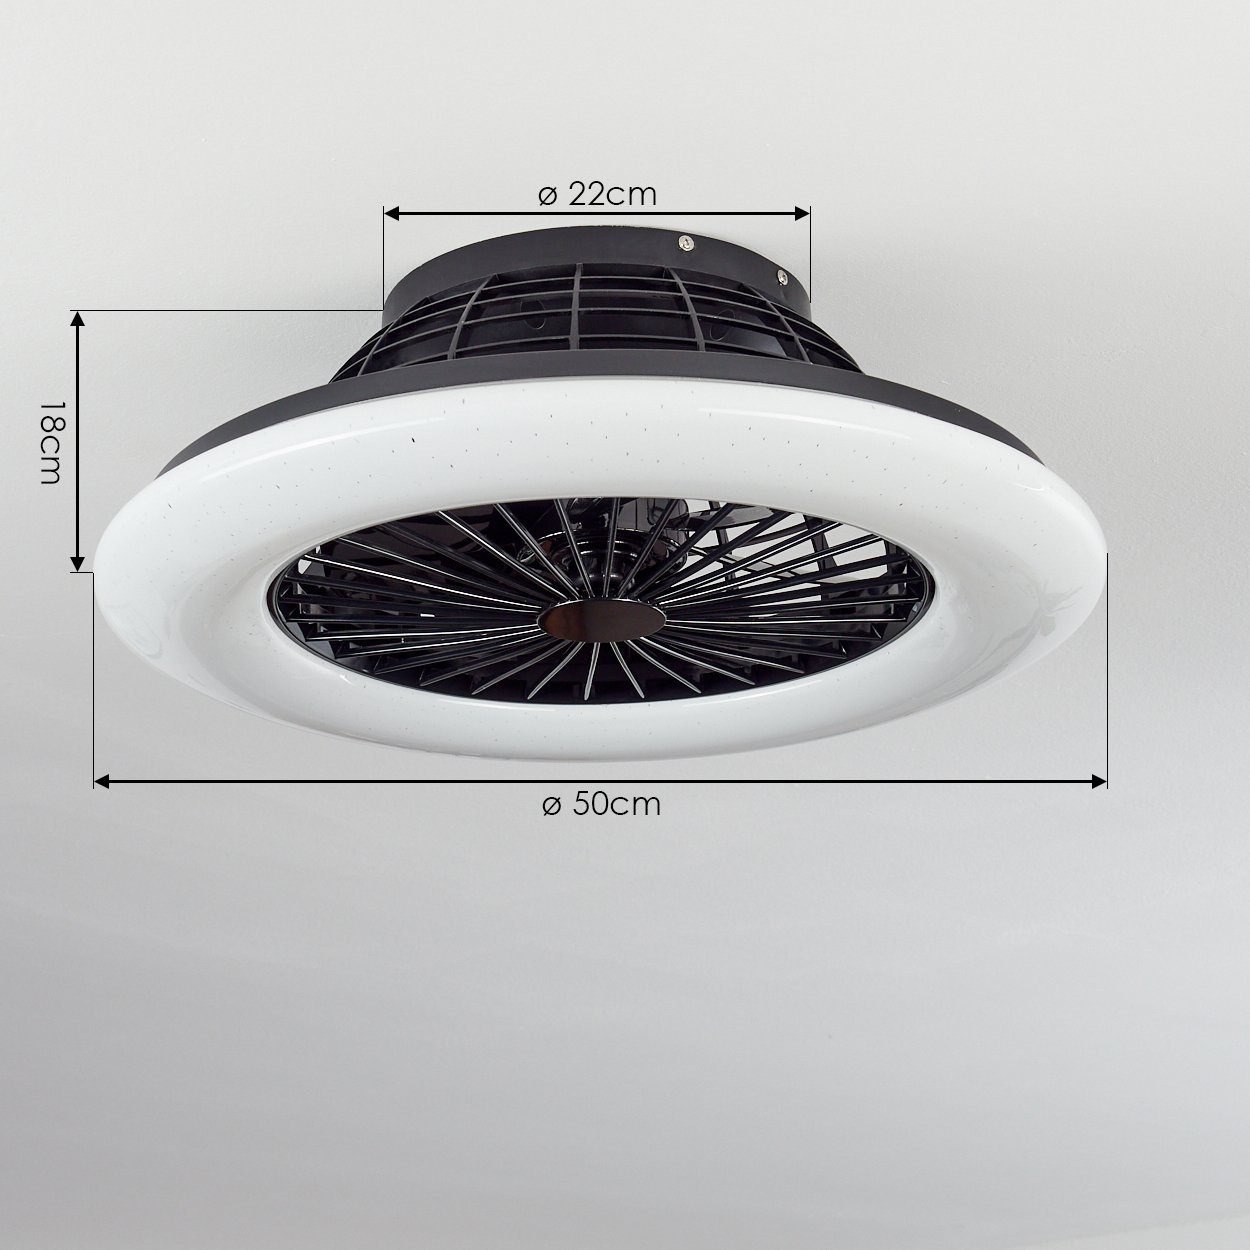 Metall, »Concas« Deckenlampe, Ventilator aus Tischturmventilator Schwarz, hofstein Weiß Kunststoff,